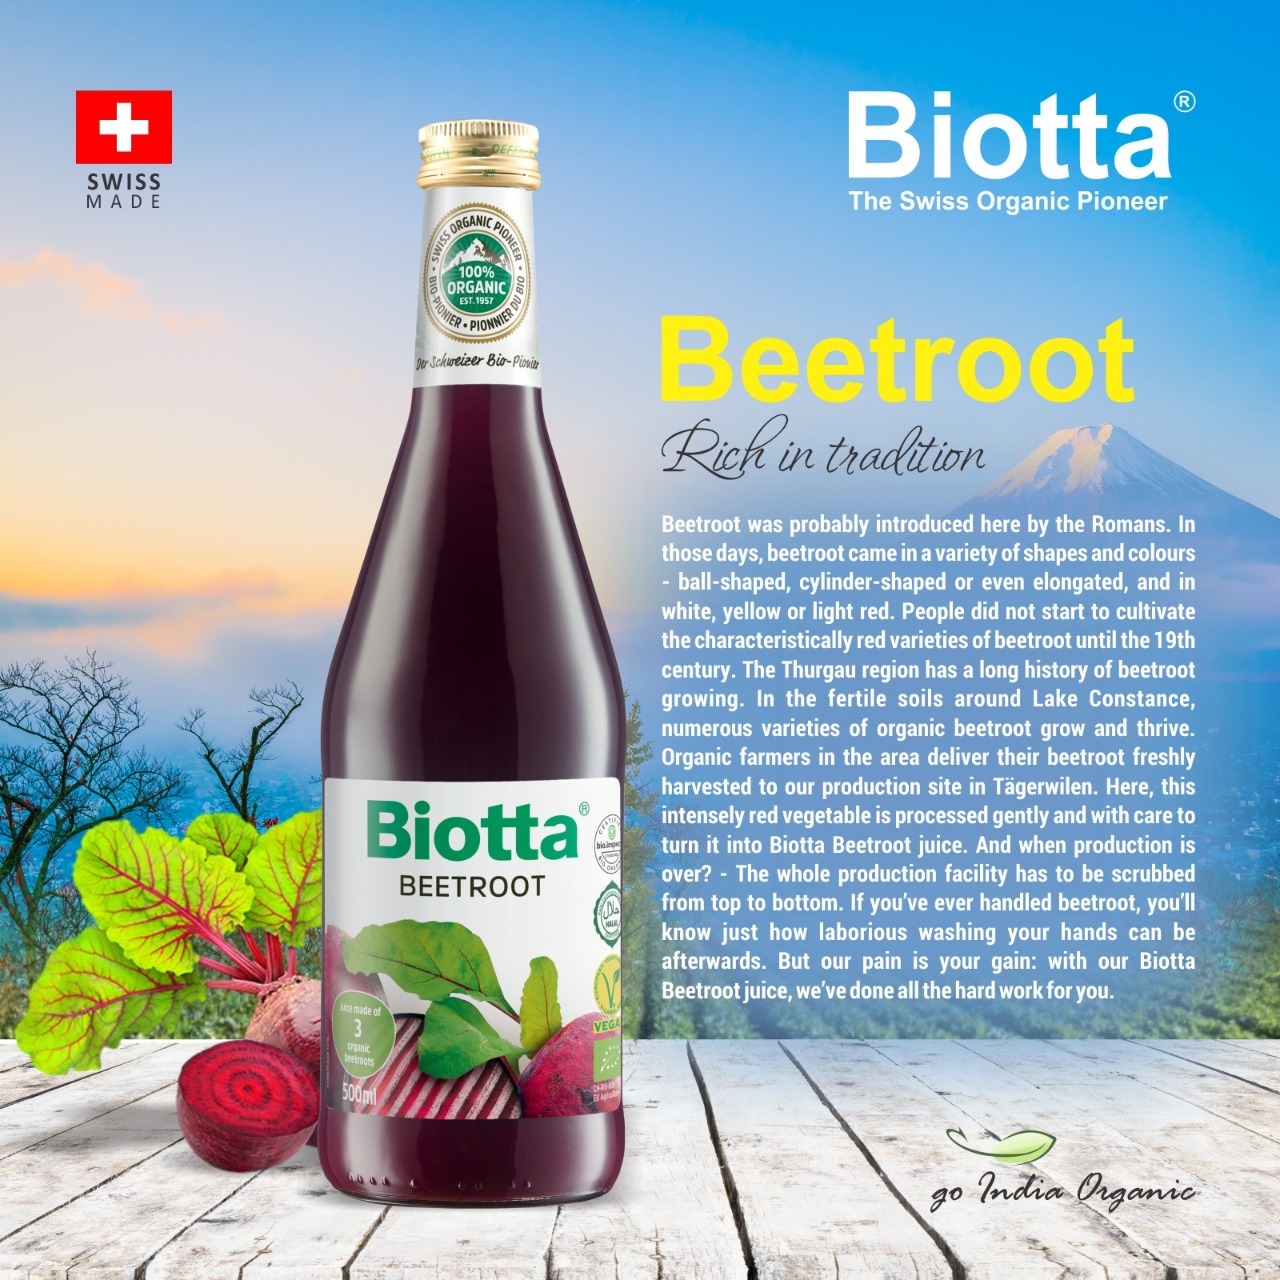 Biotta Organic Beetroot Juice from Switzerland